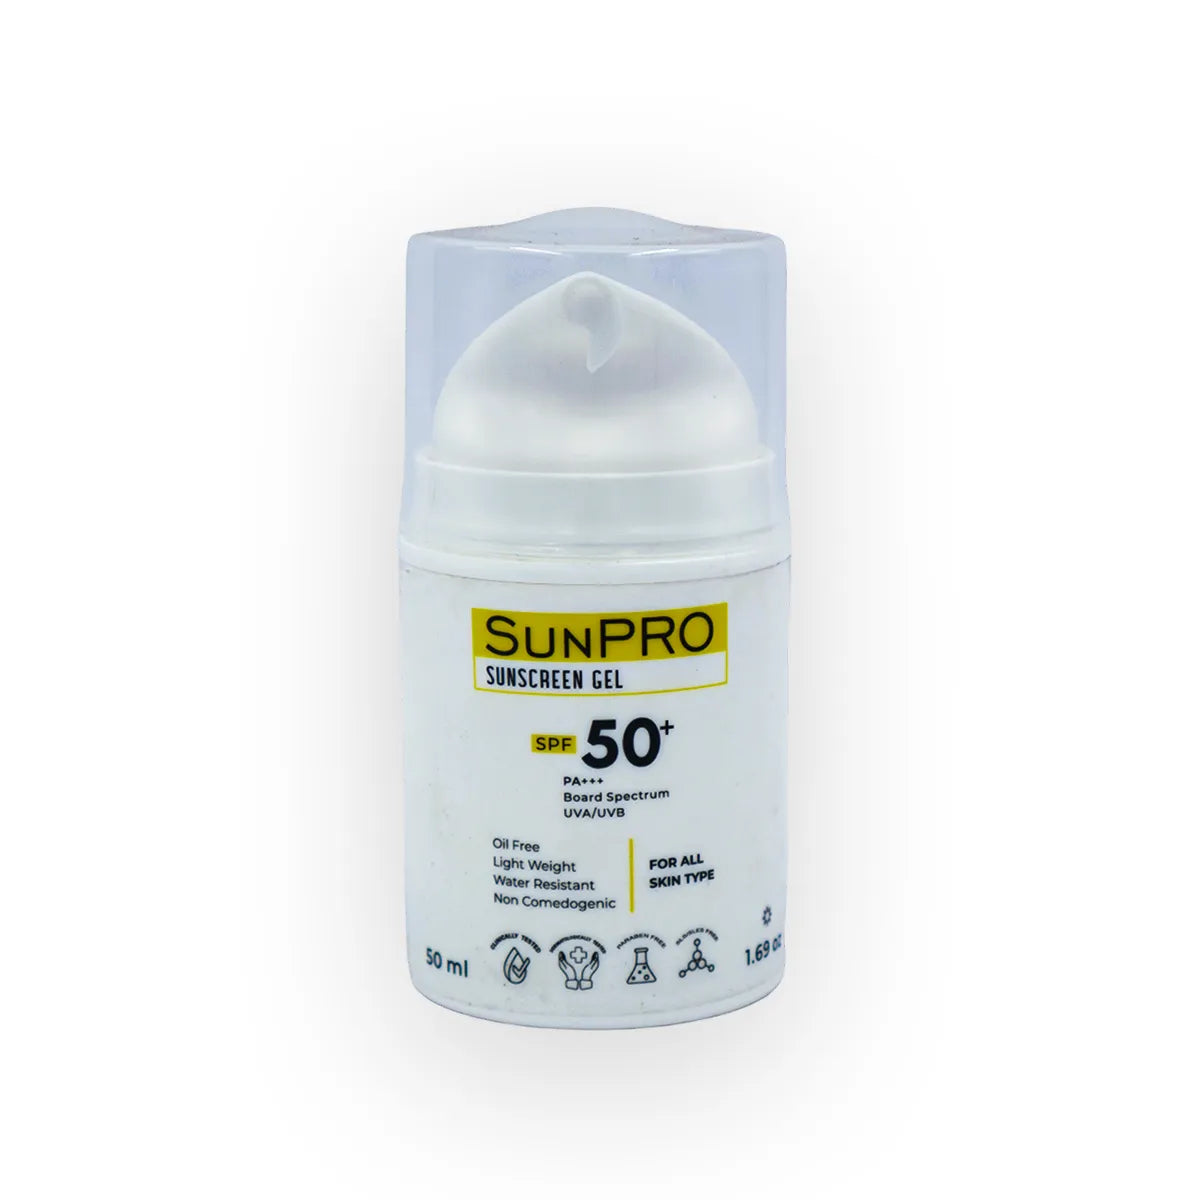 SBT Sunpro Sunscreen Gel Spf 50